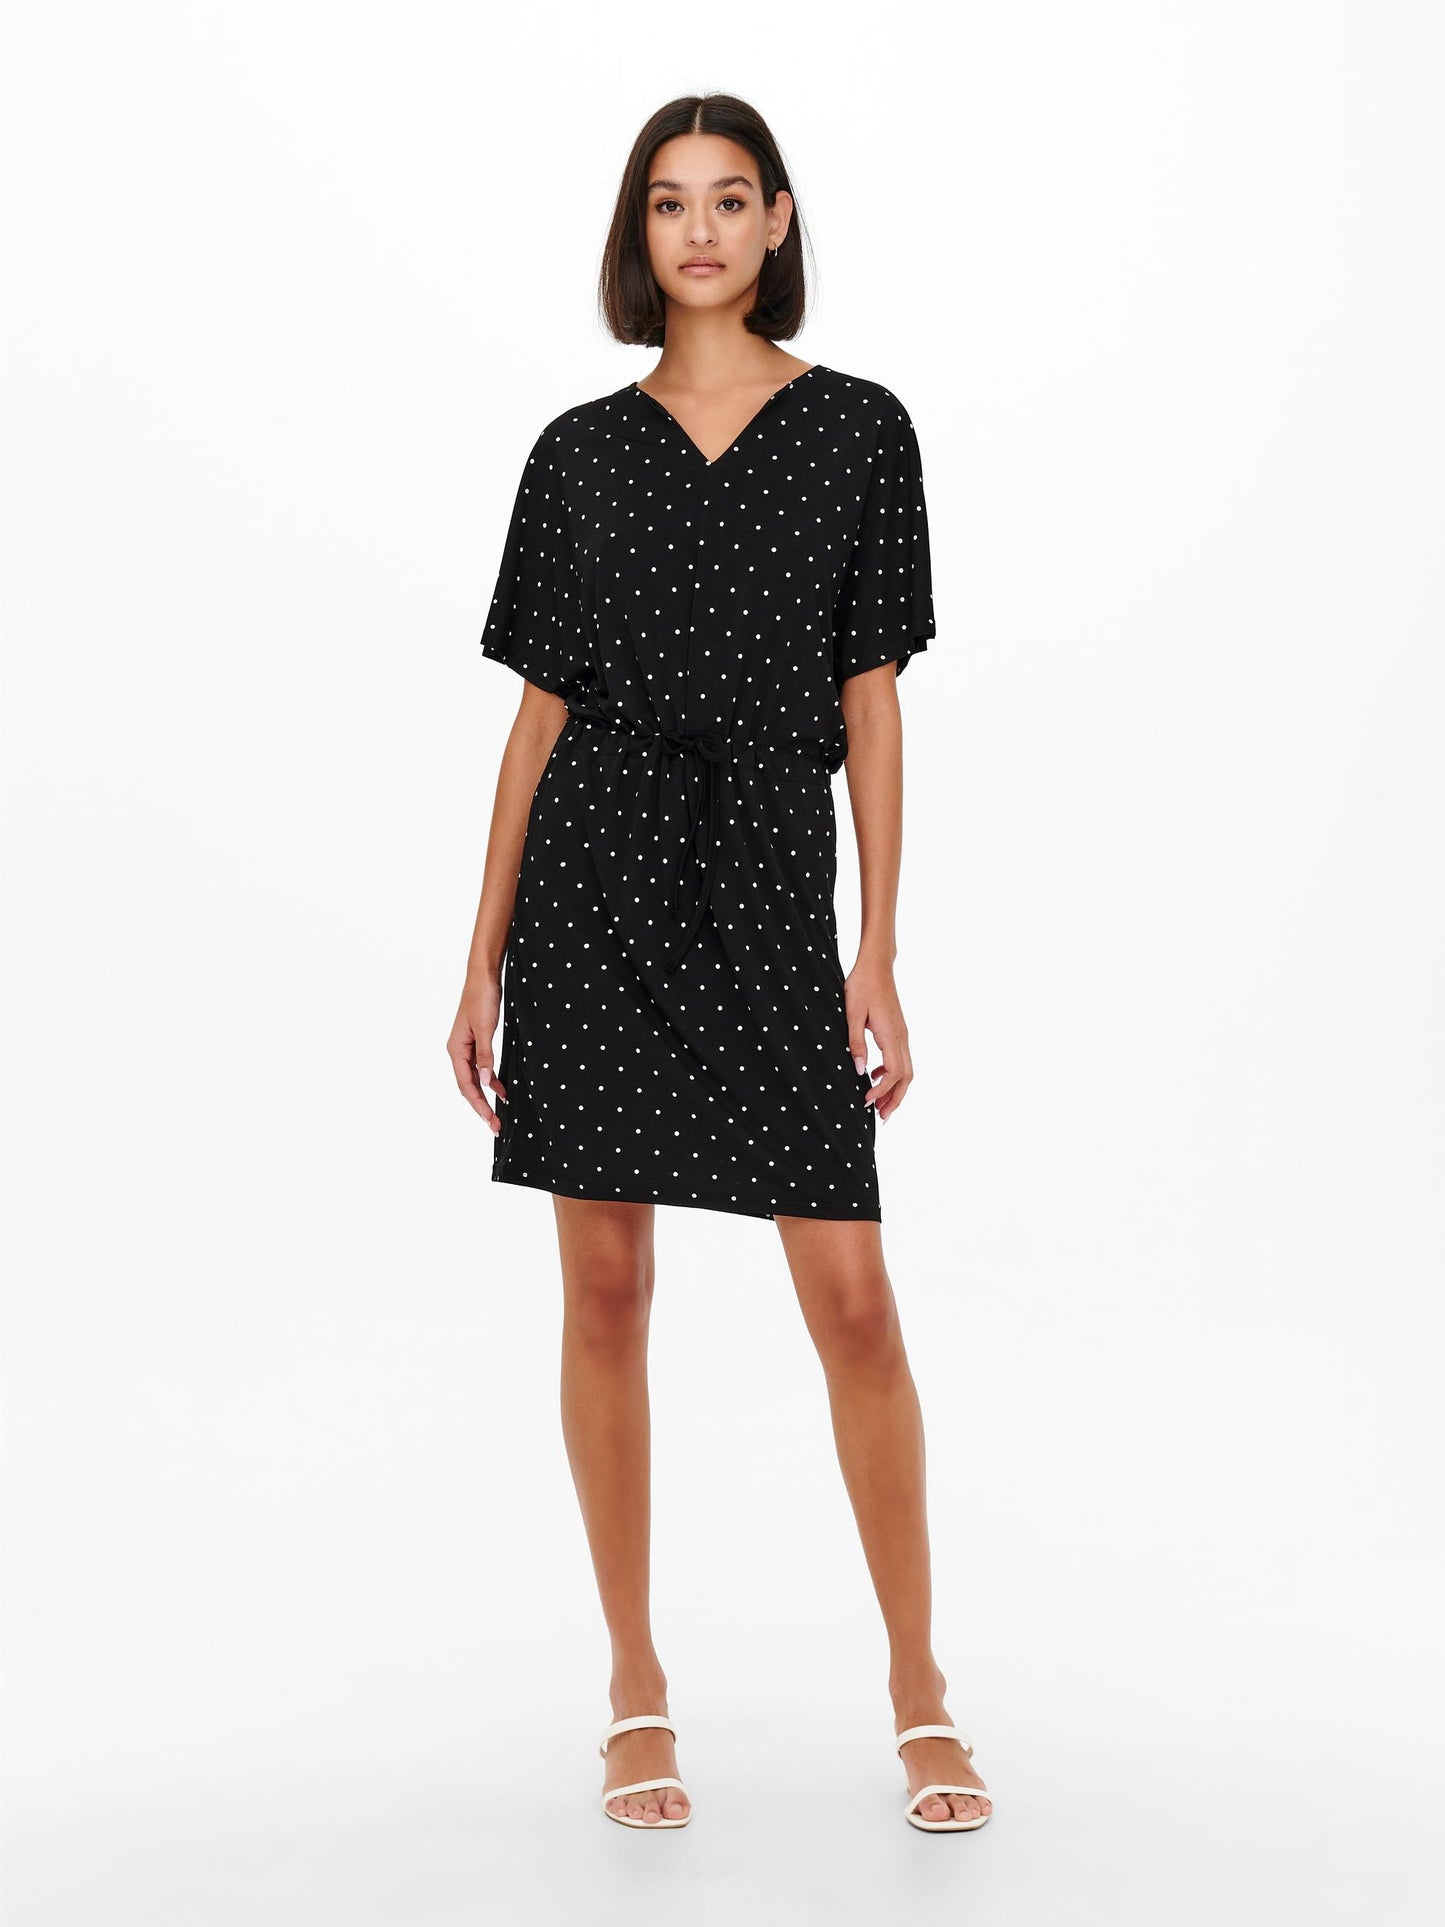 Alina Short Sleeved Dress - Black/White Dots